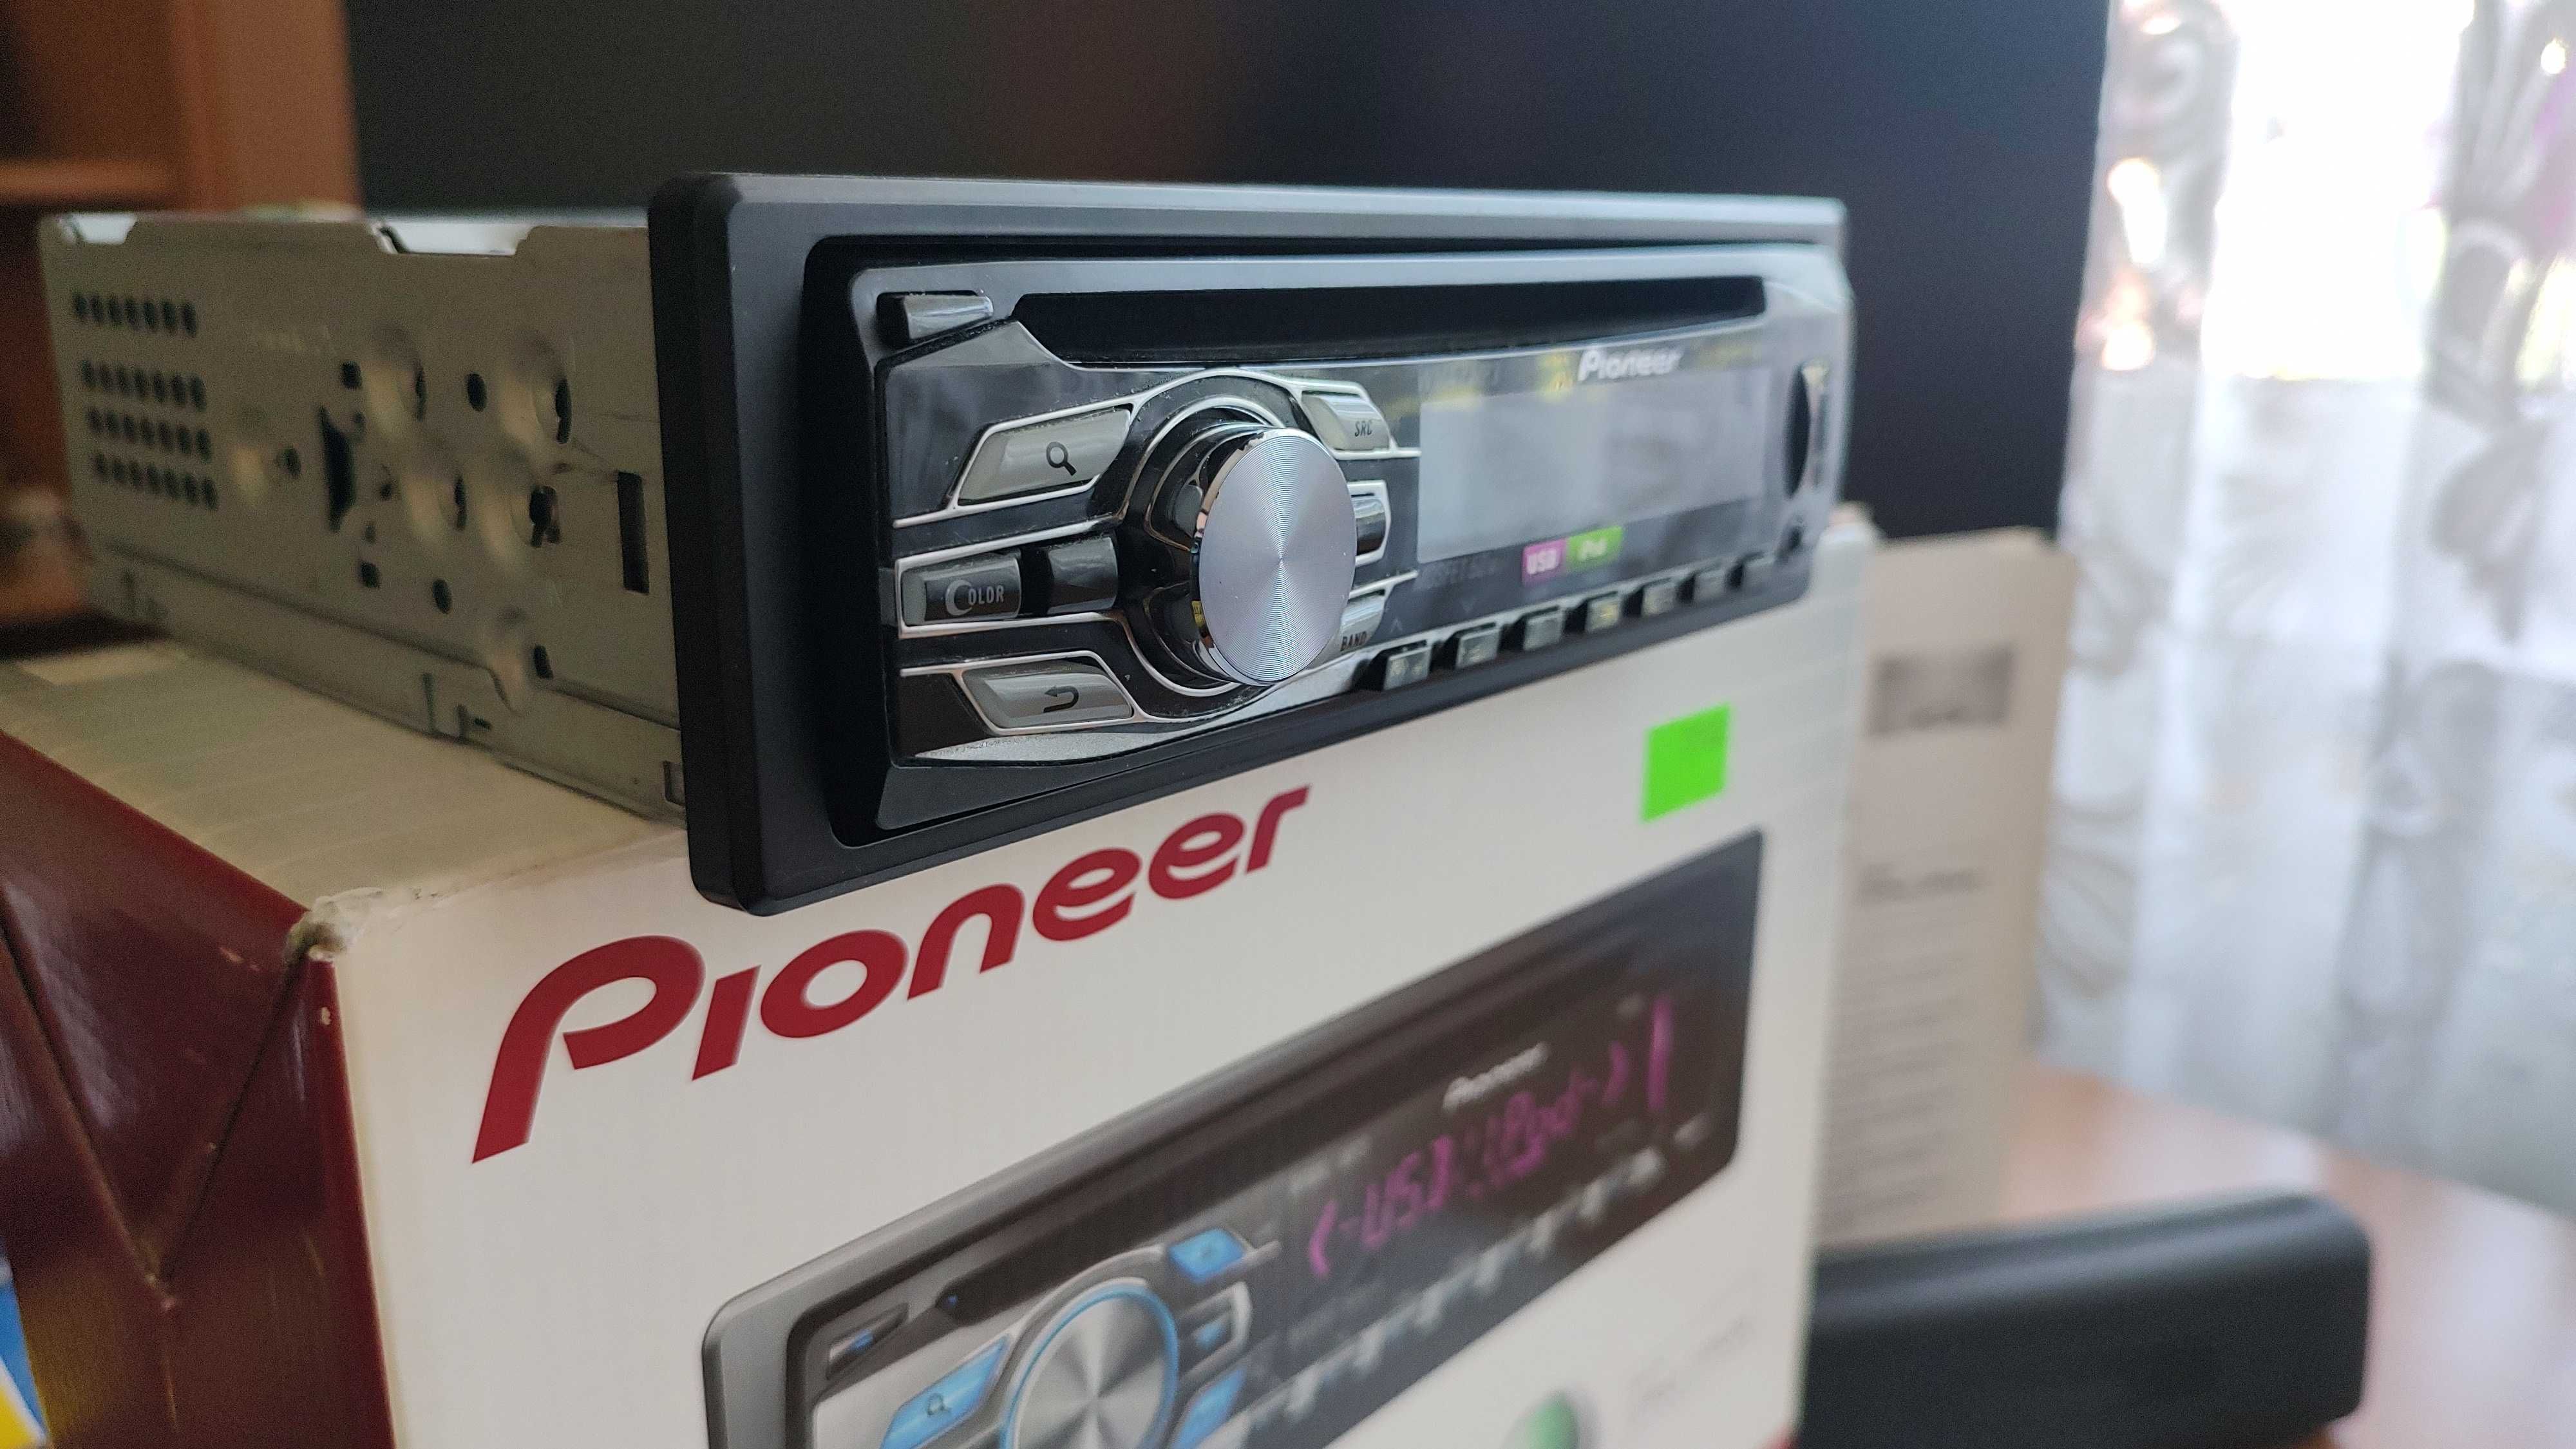 PIONEER DEH-3400UB radio samochodowe